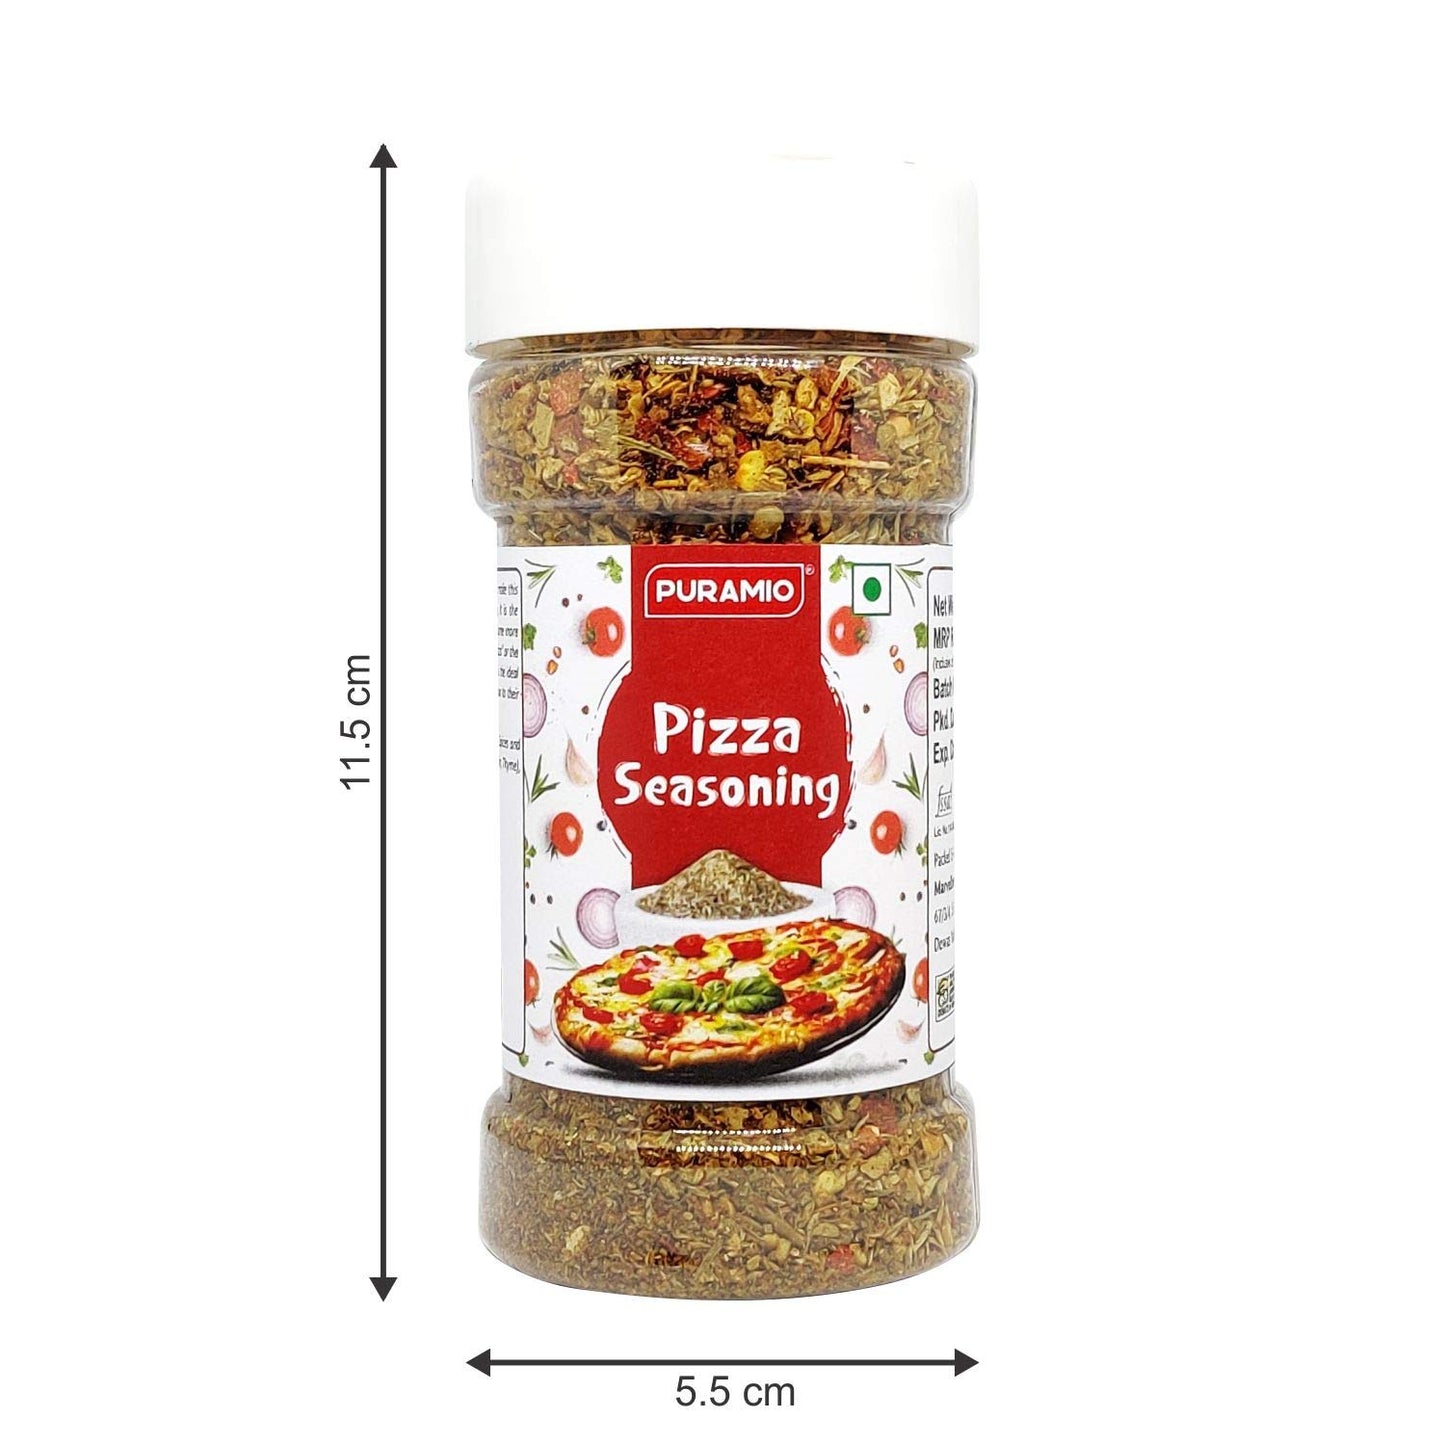 Puramio Combo Pack of Chilli Flakes, 70g + Pizza Seasoning, 100g [100% Natural]